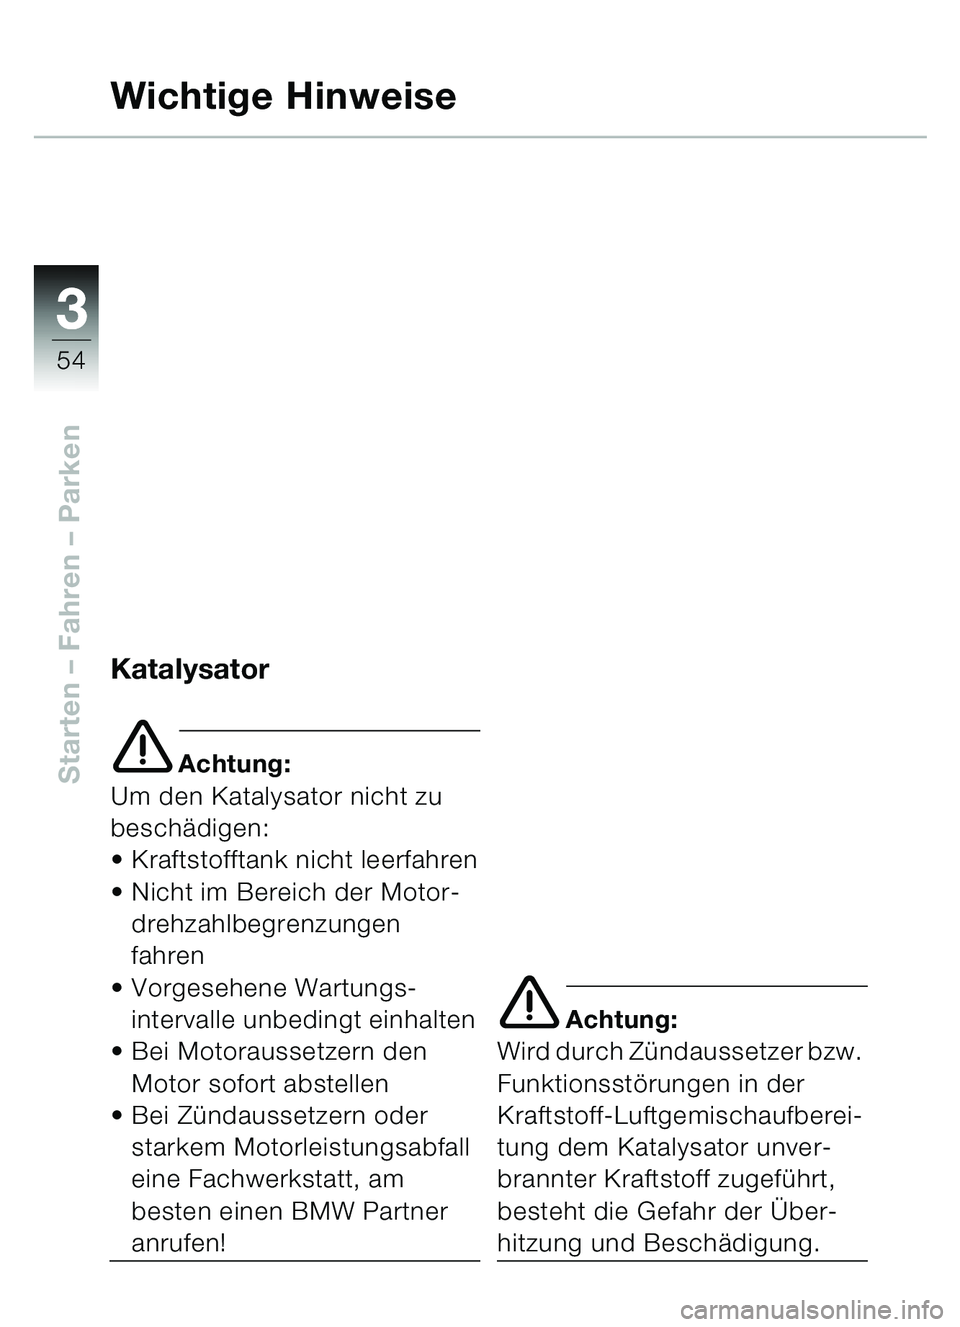 BMW MOTORRAD C1 2000  Betriebsanleitung (in German) 33
54
Starten – Fahren  – Parken
Wichtige Hinweise
Katalysator
e Achtung:
Um den Katalysator nicht zu 
besch ädigen:
 Kraftstofftank nicht leerfahren
 Nicht im Bereich der Motor-
drehzahlbegren